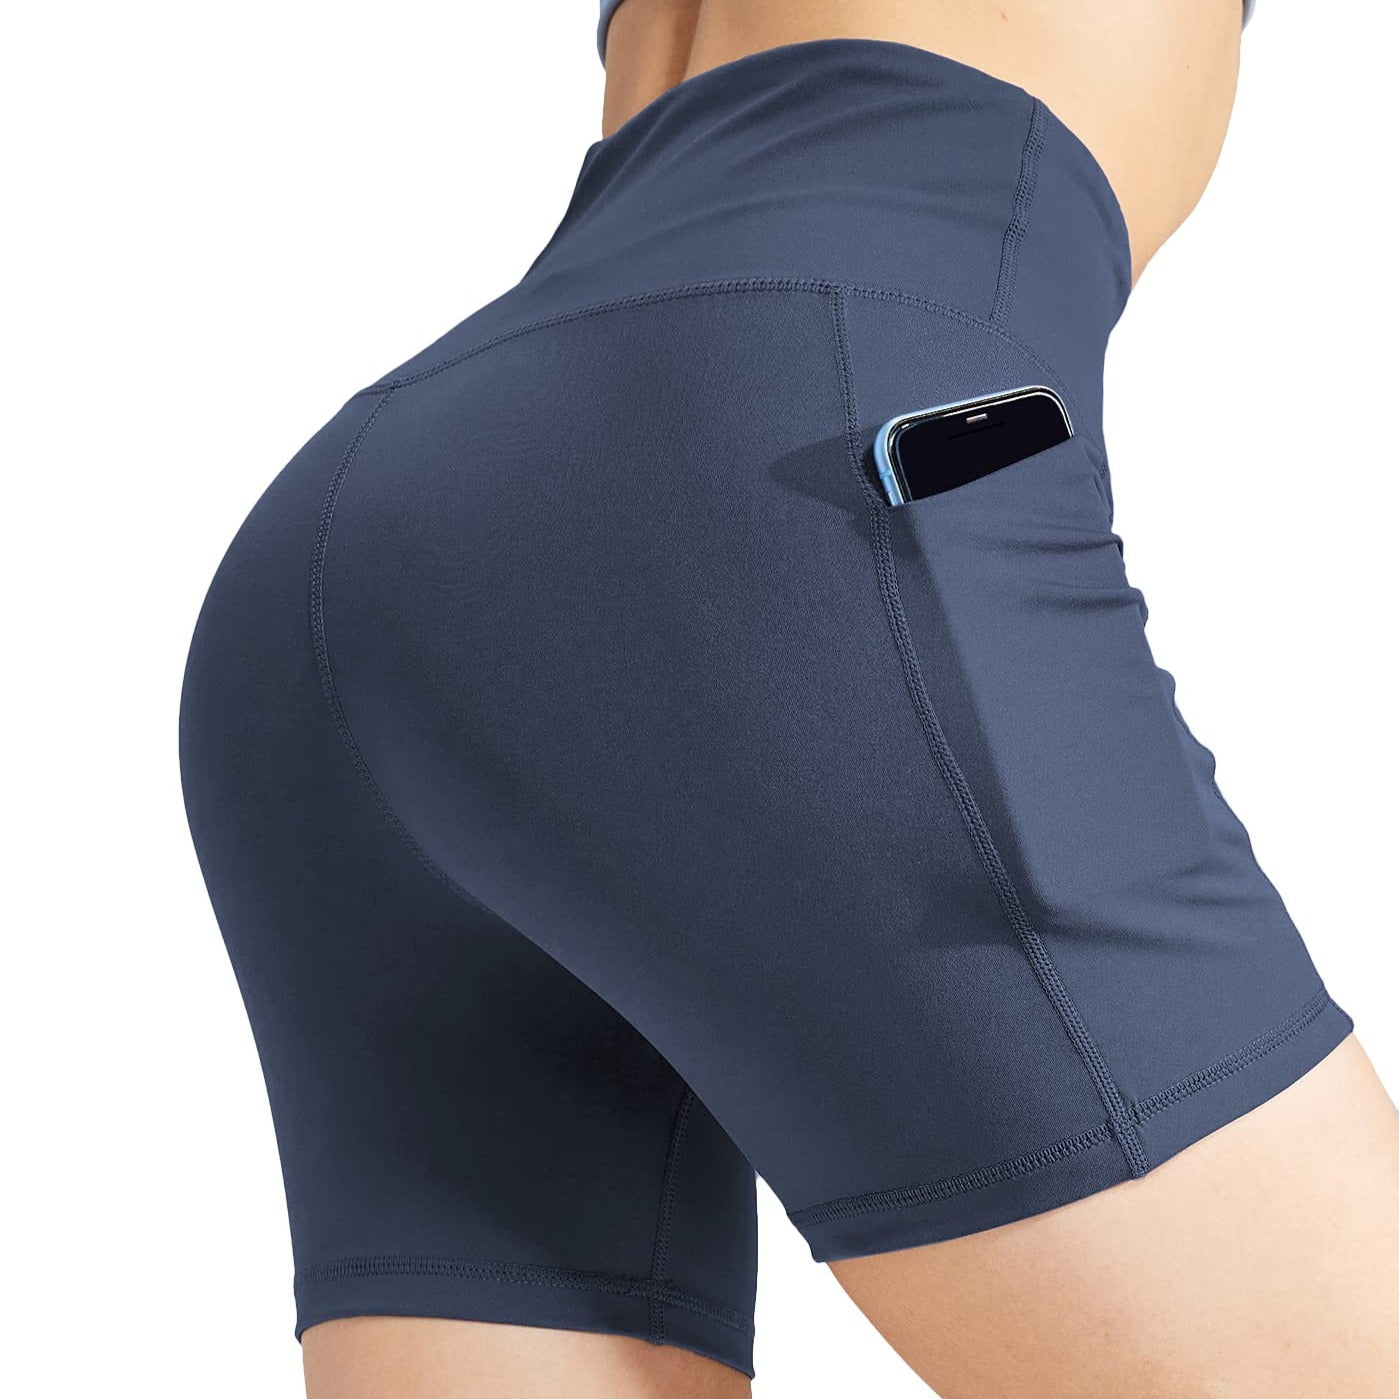 High Waist Yoga Tummy Control Shorts, 5Inch/8 Inch Bottoms MIER